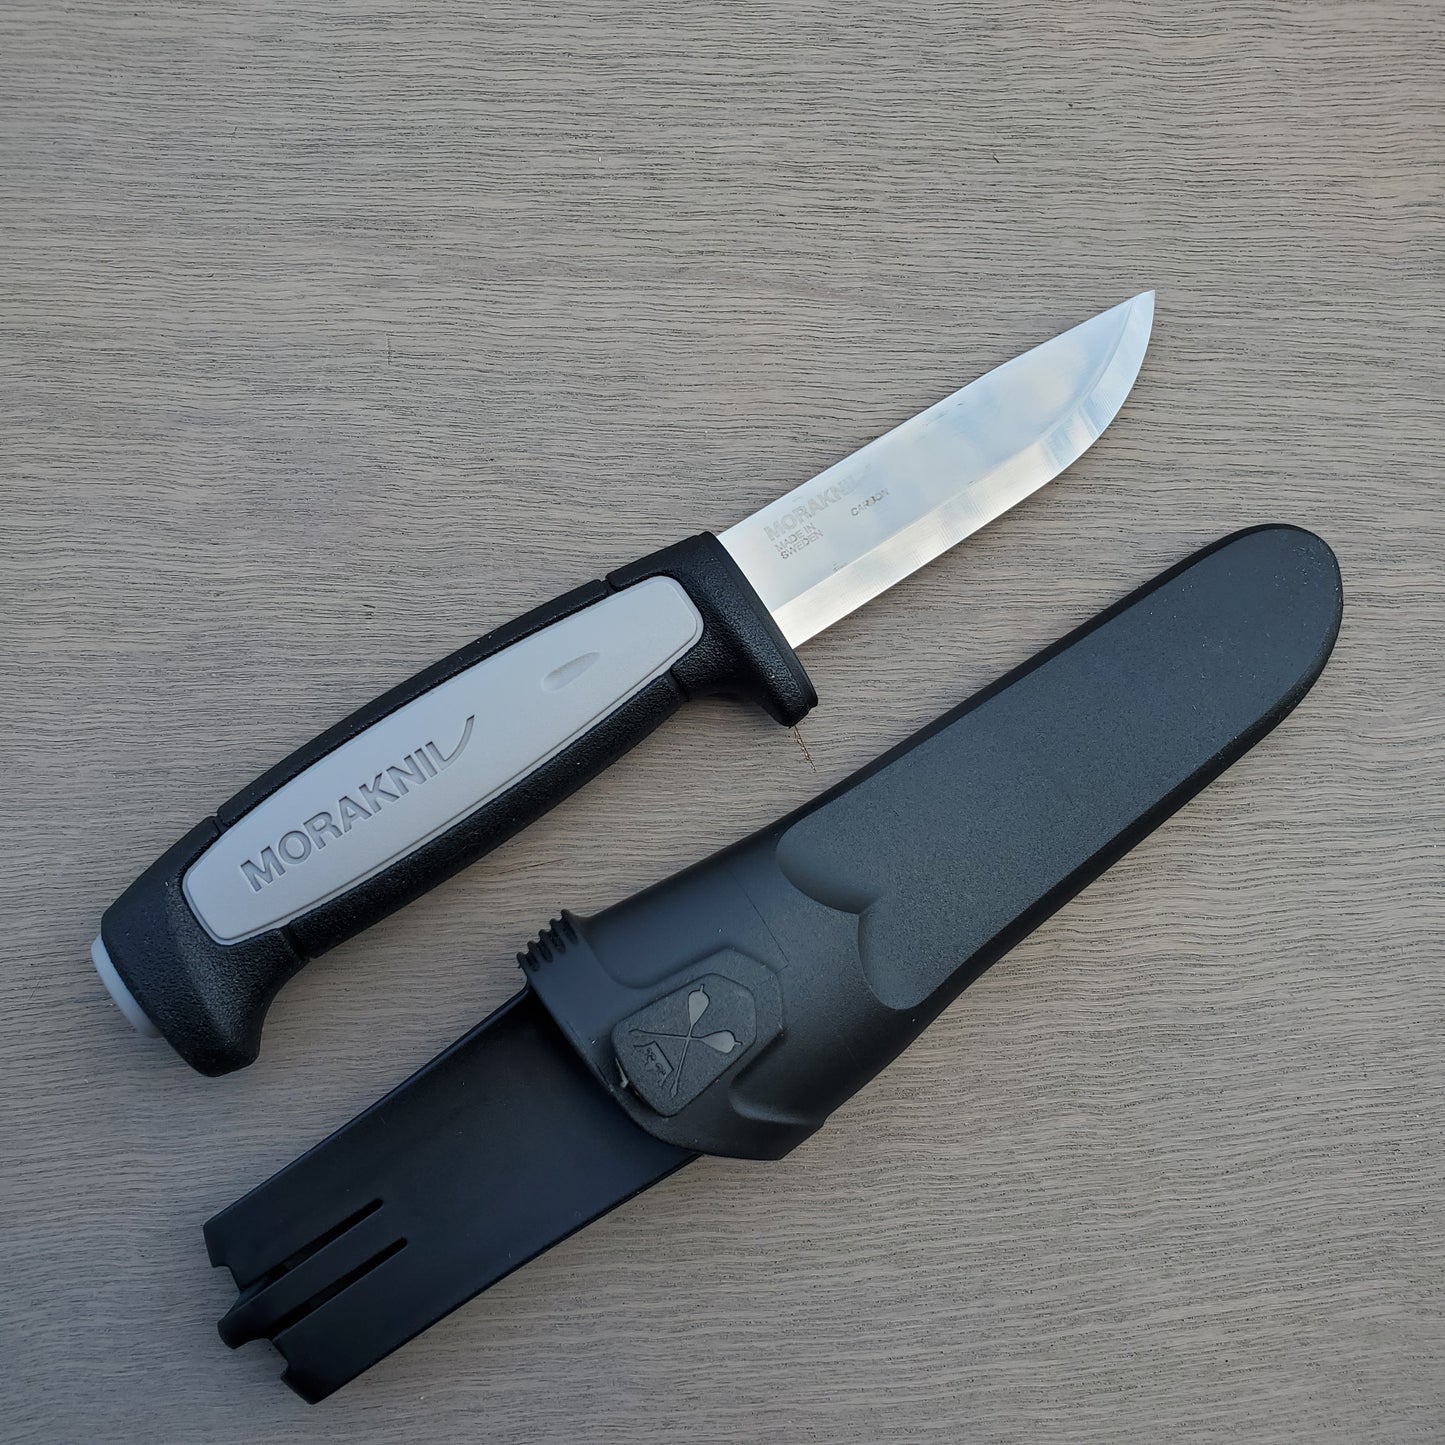 Morakniv Pro S Fixed Blade Knife Review - PRAKTICALA